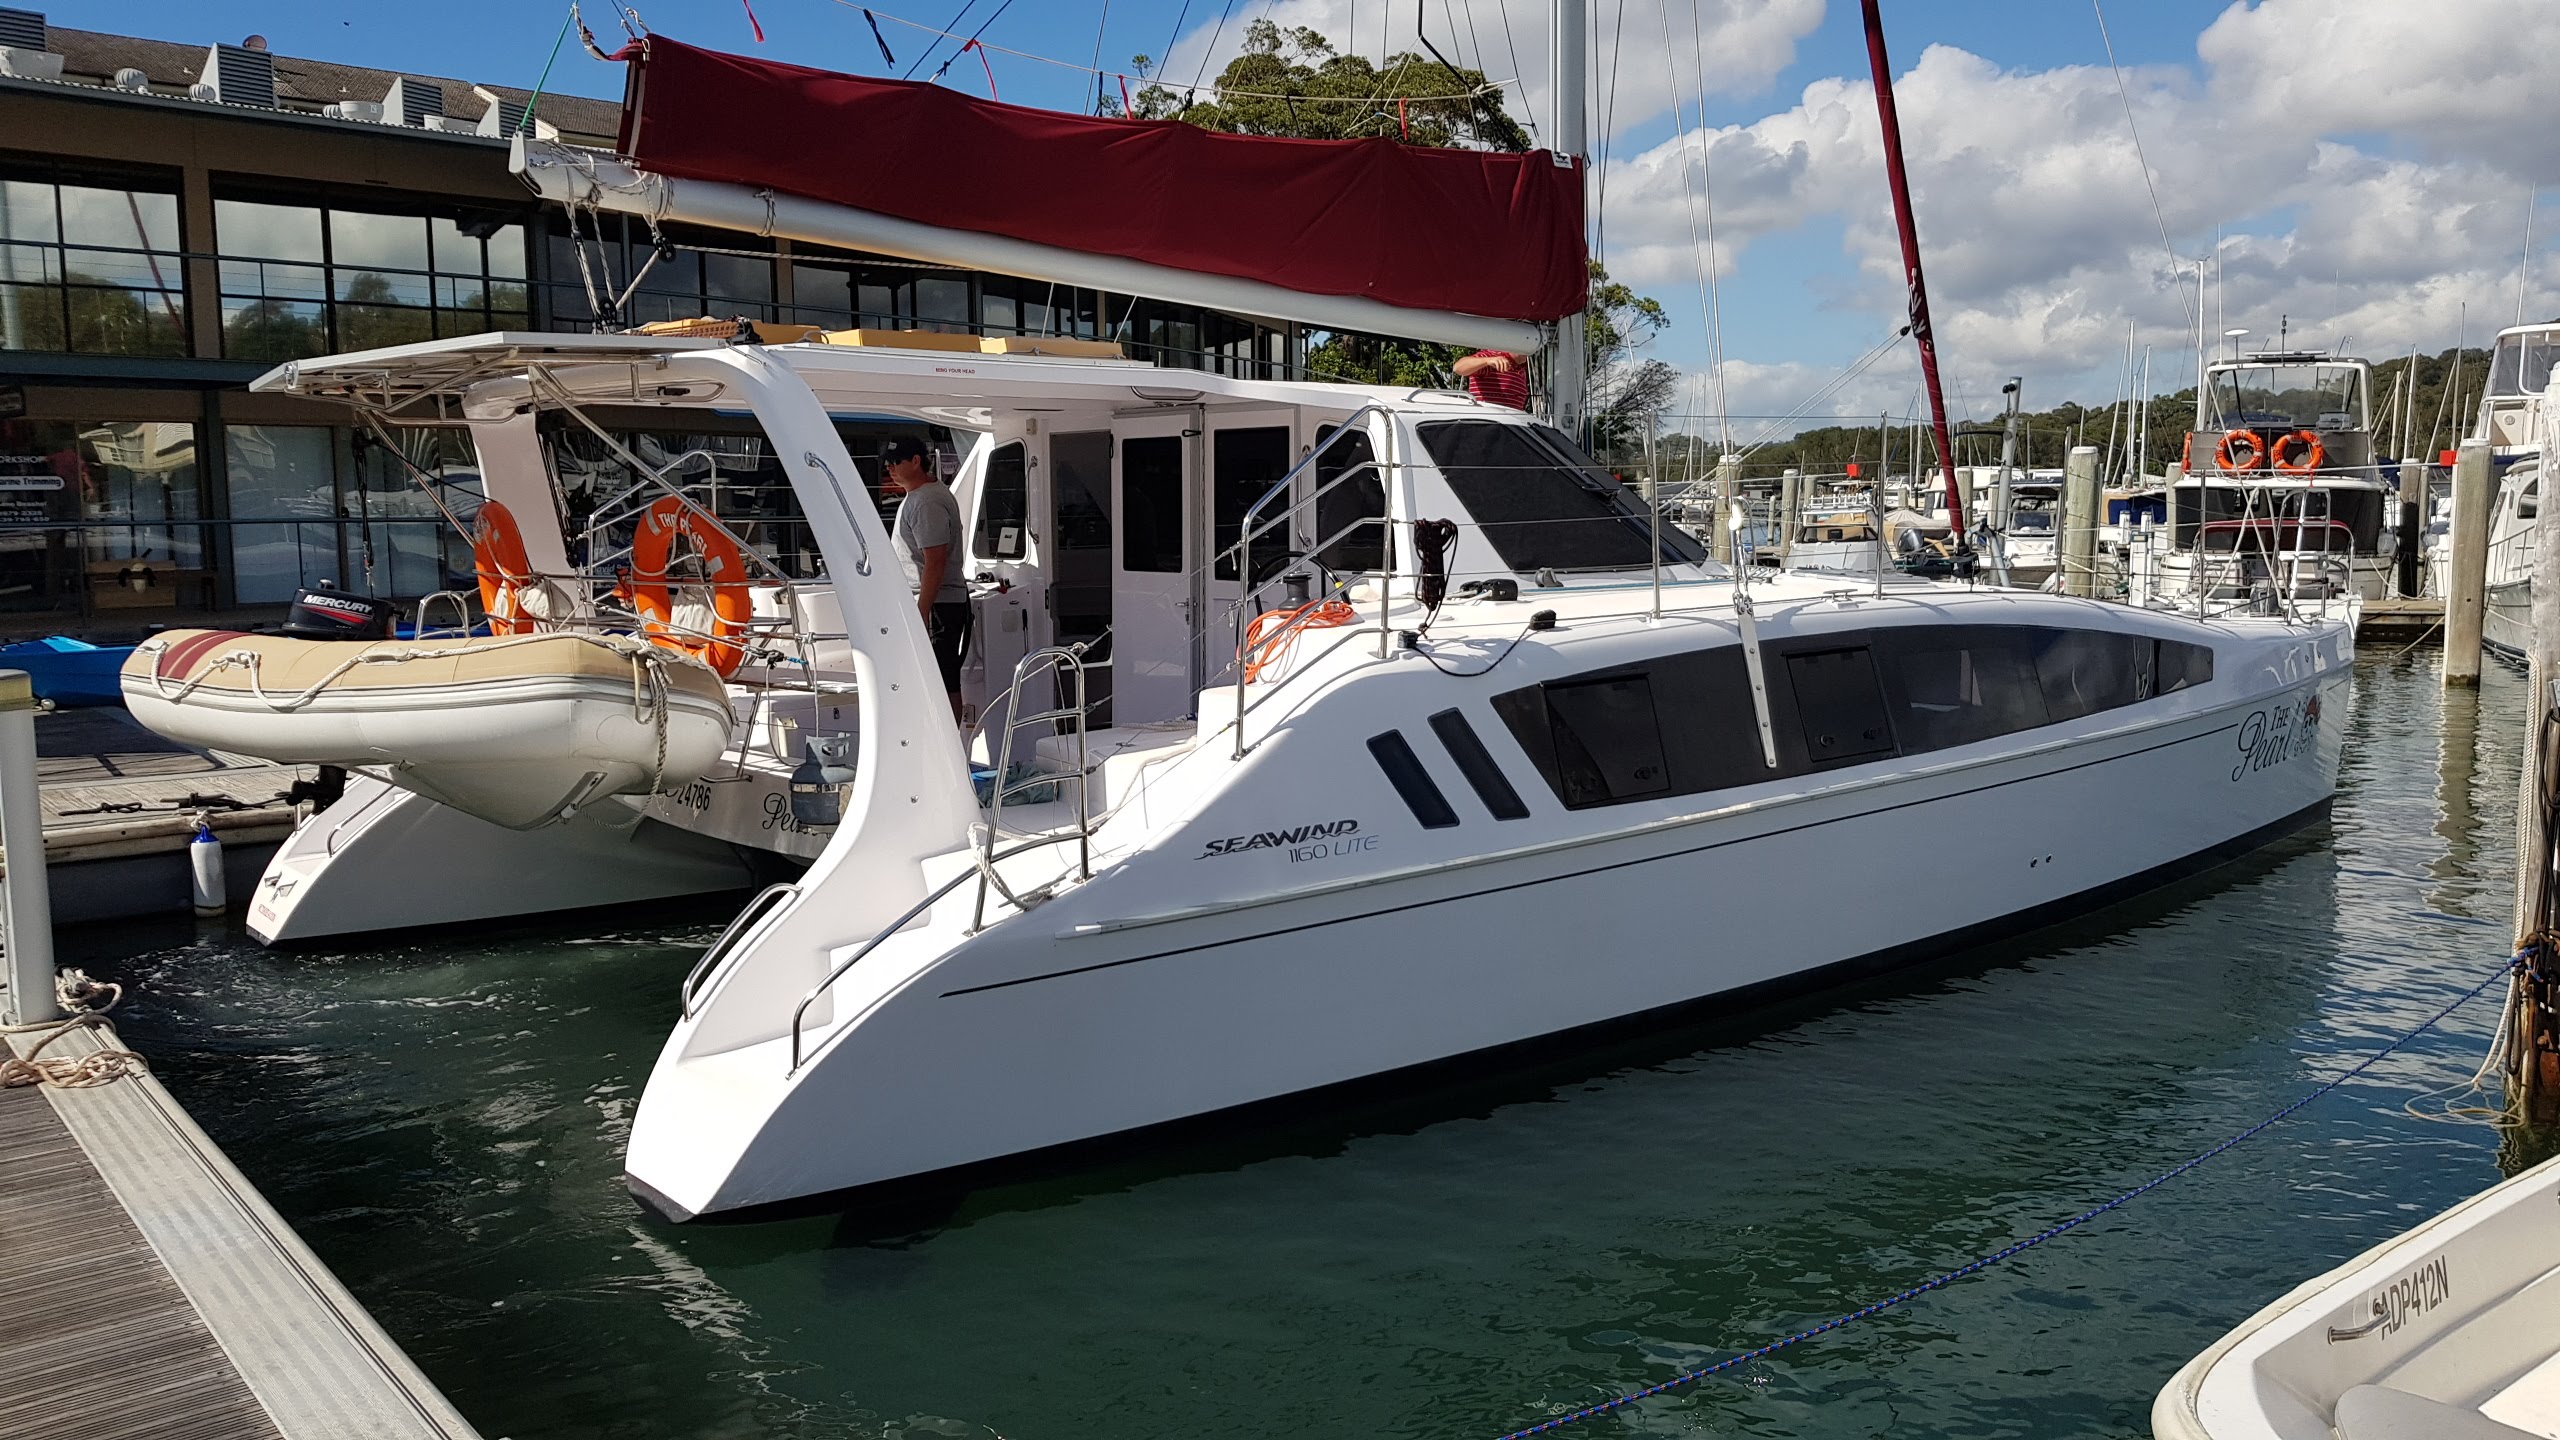 Luxury Catamaran
5 Star Rating
6-8 berth